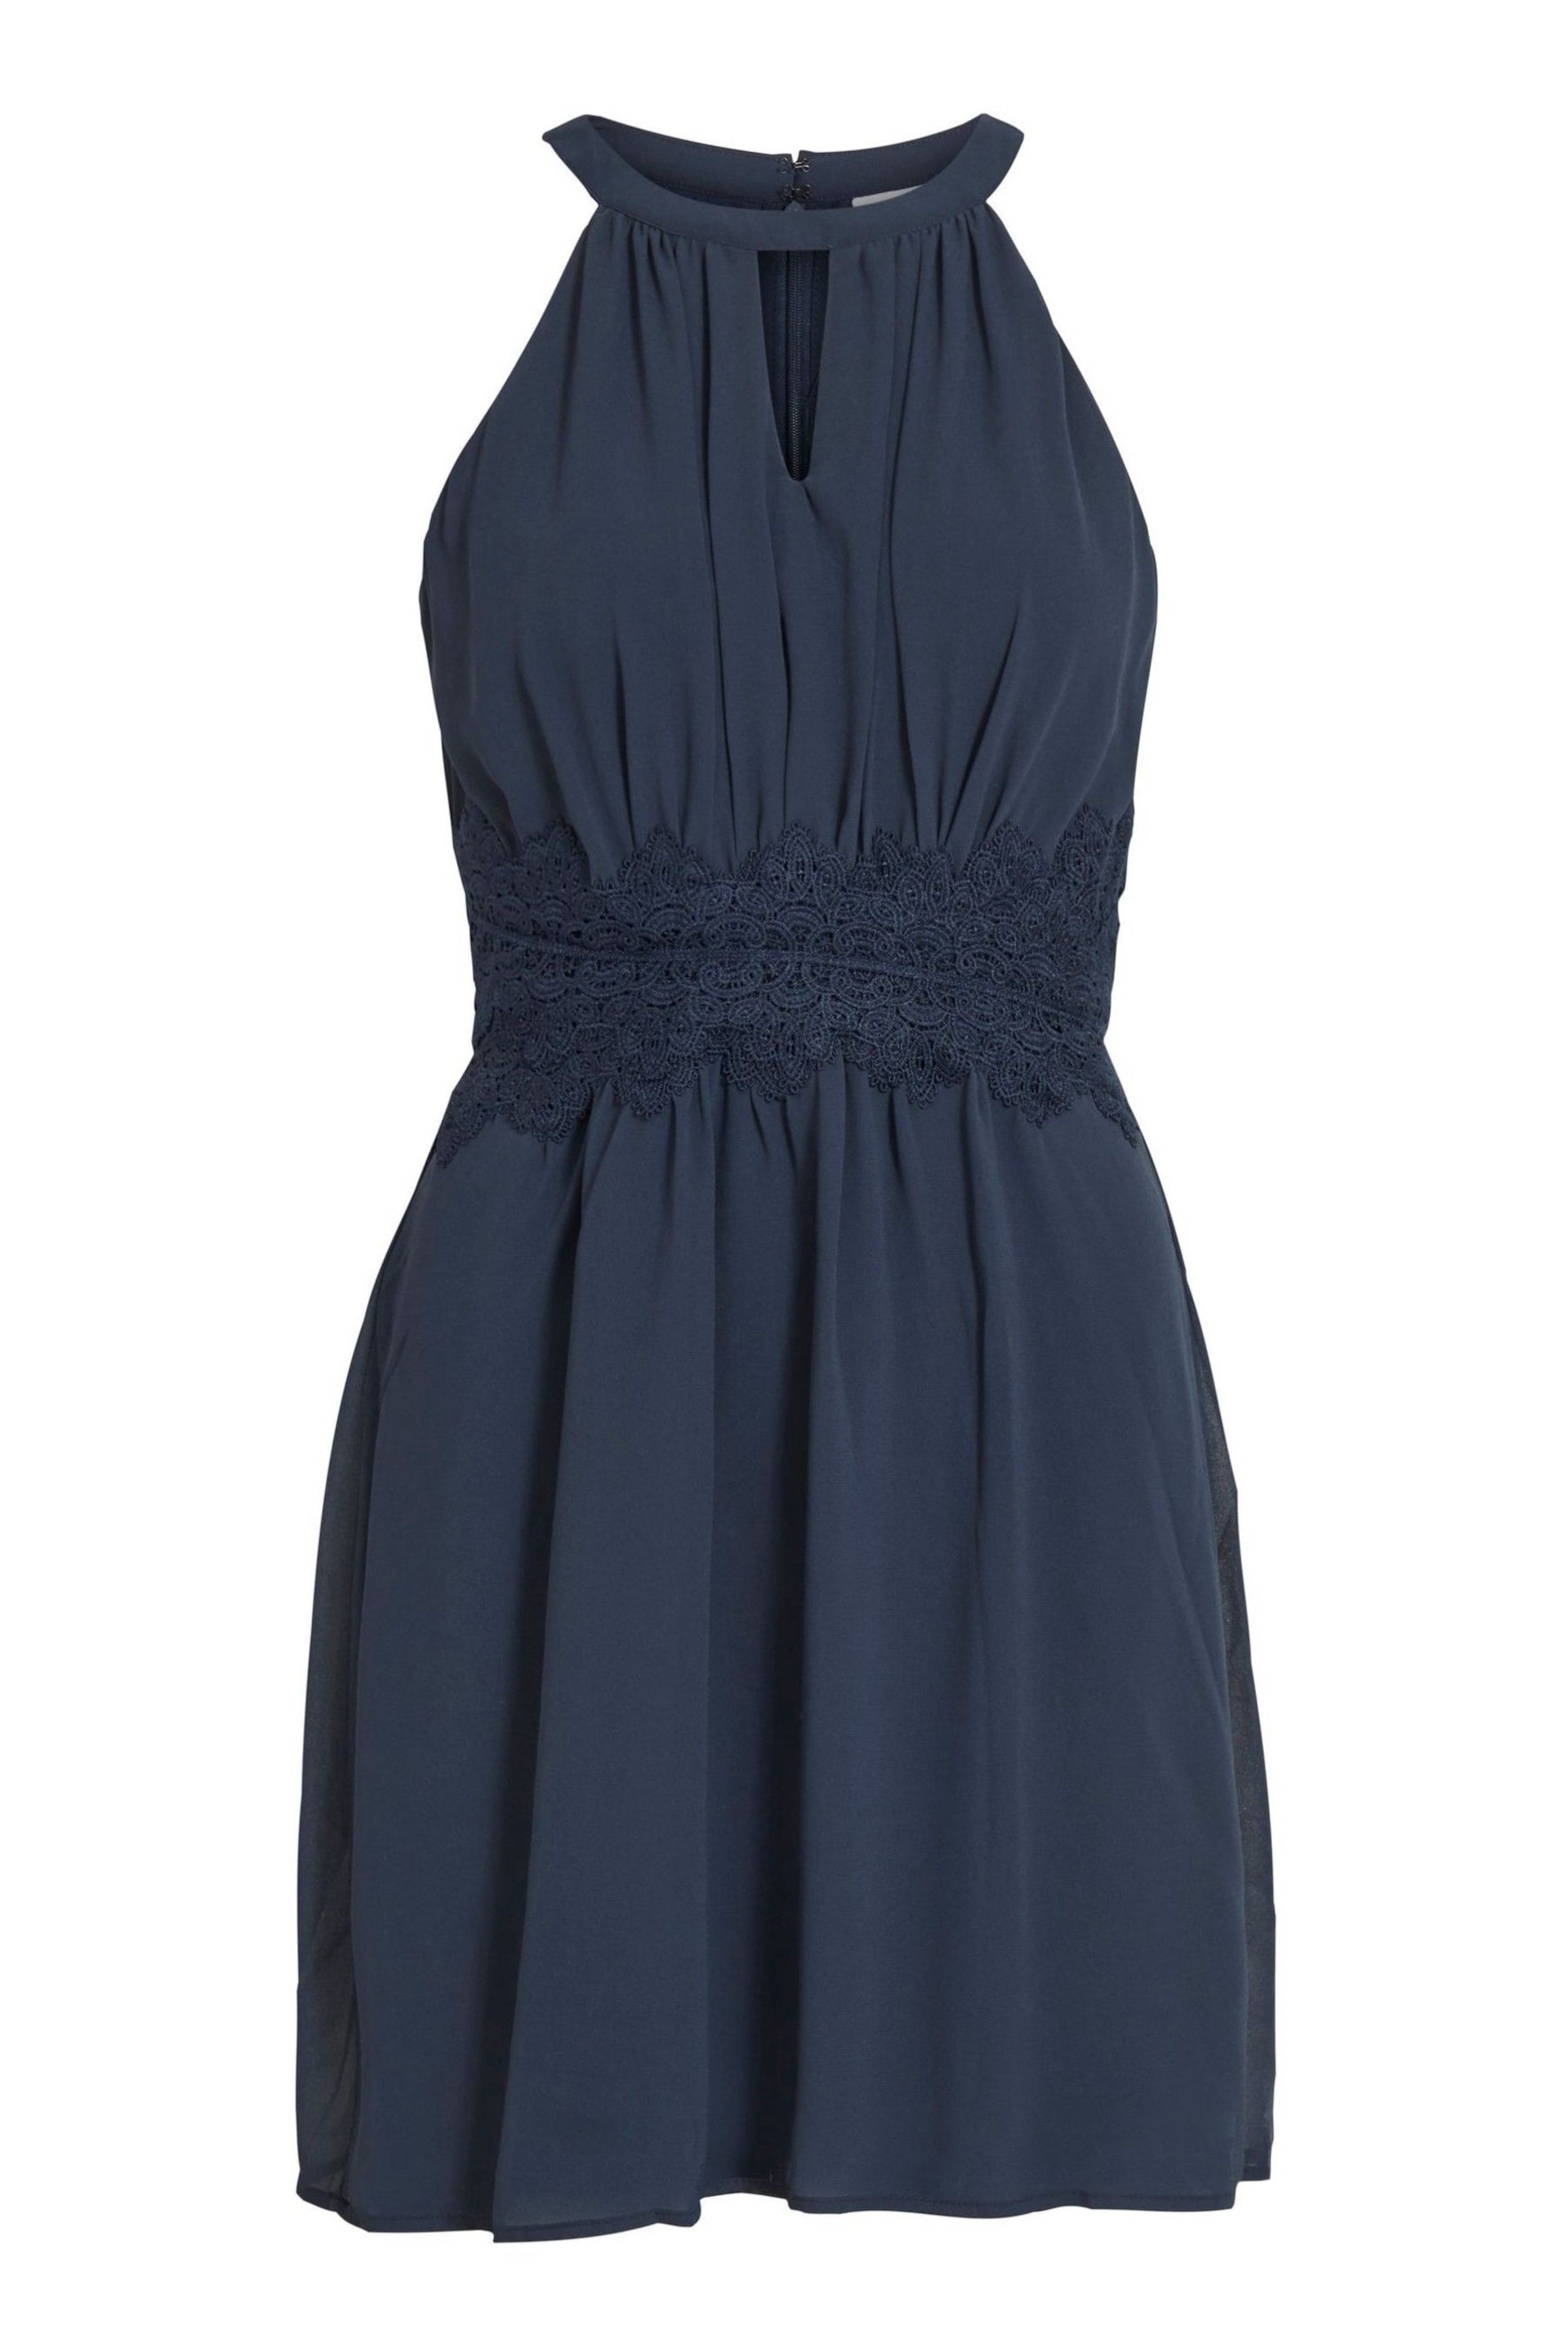 VILA Navy/Blue Halter Neck Tulle Fit And Flare Dress - Image 5 of 5